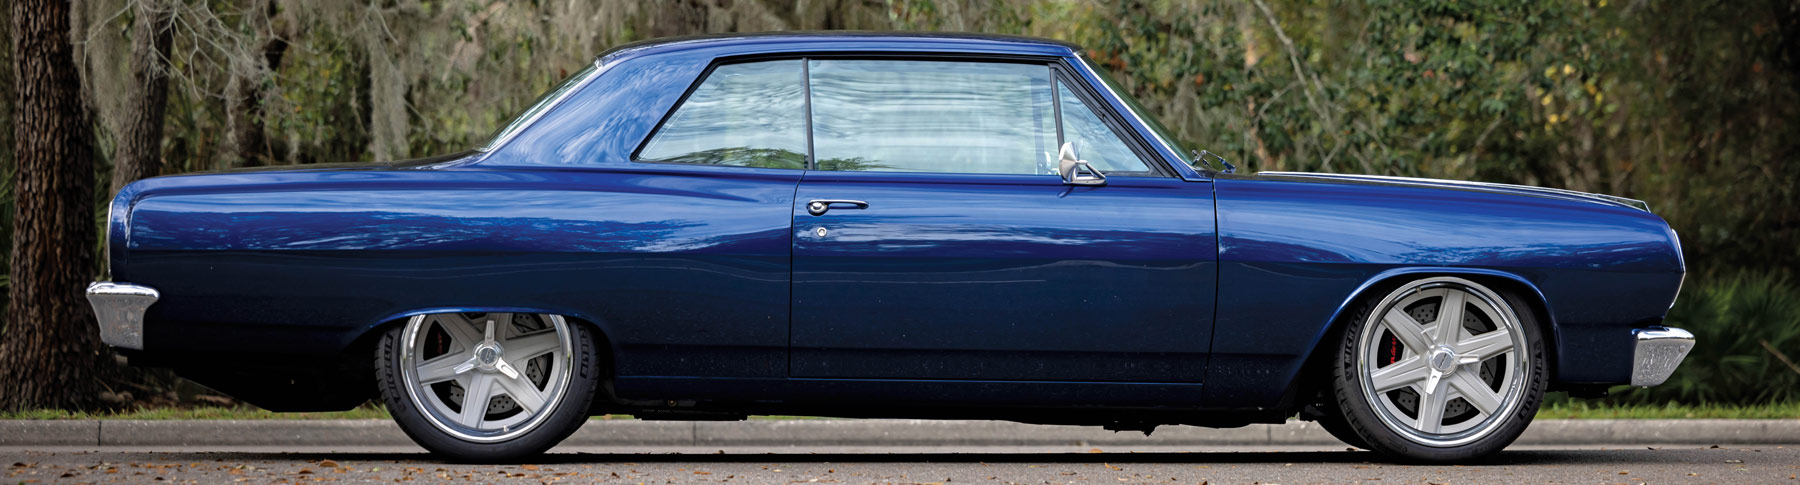 passenger side of a blue ’65 Chevrolet Chevelle Malibu SS